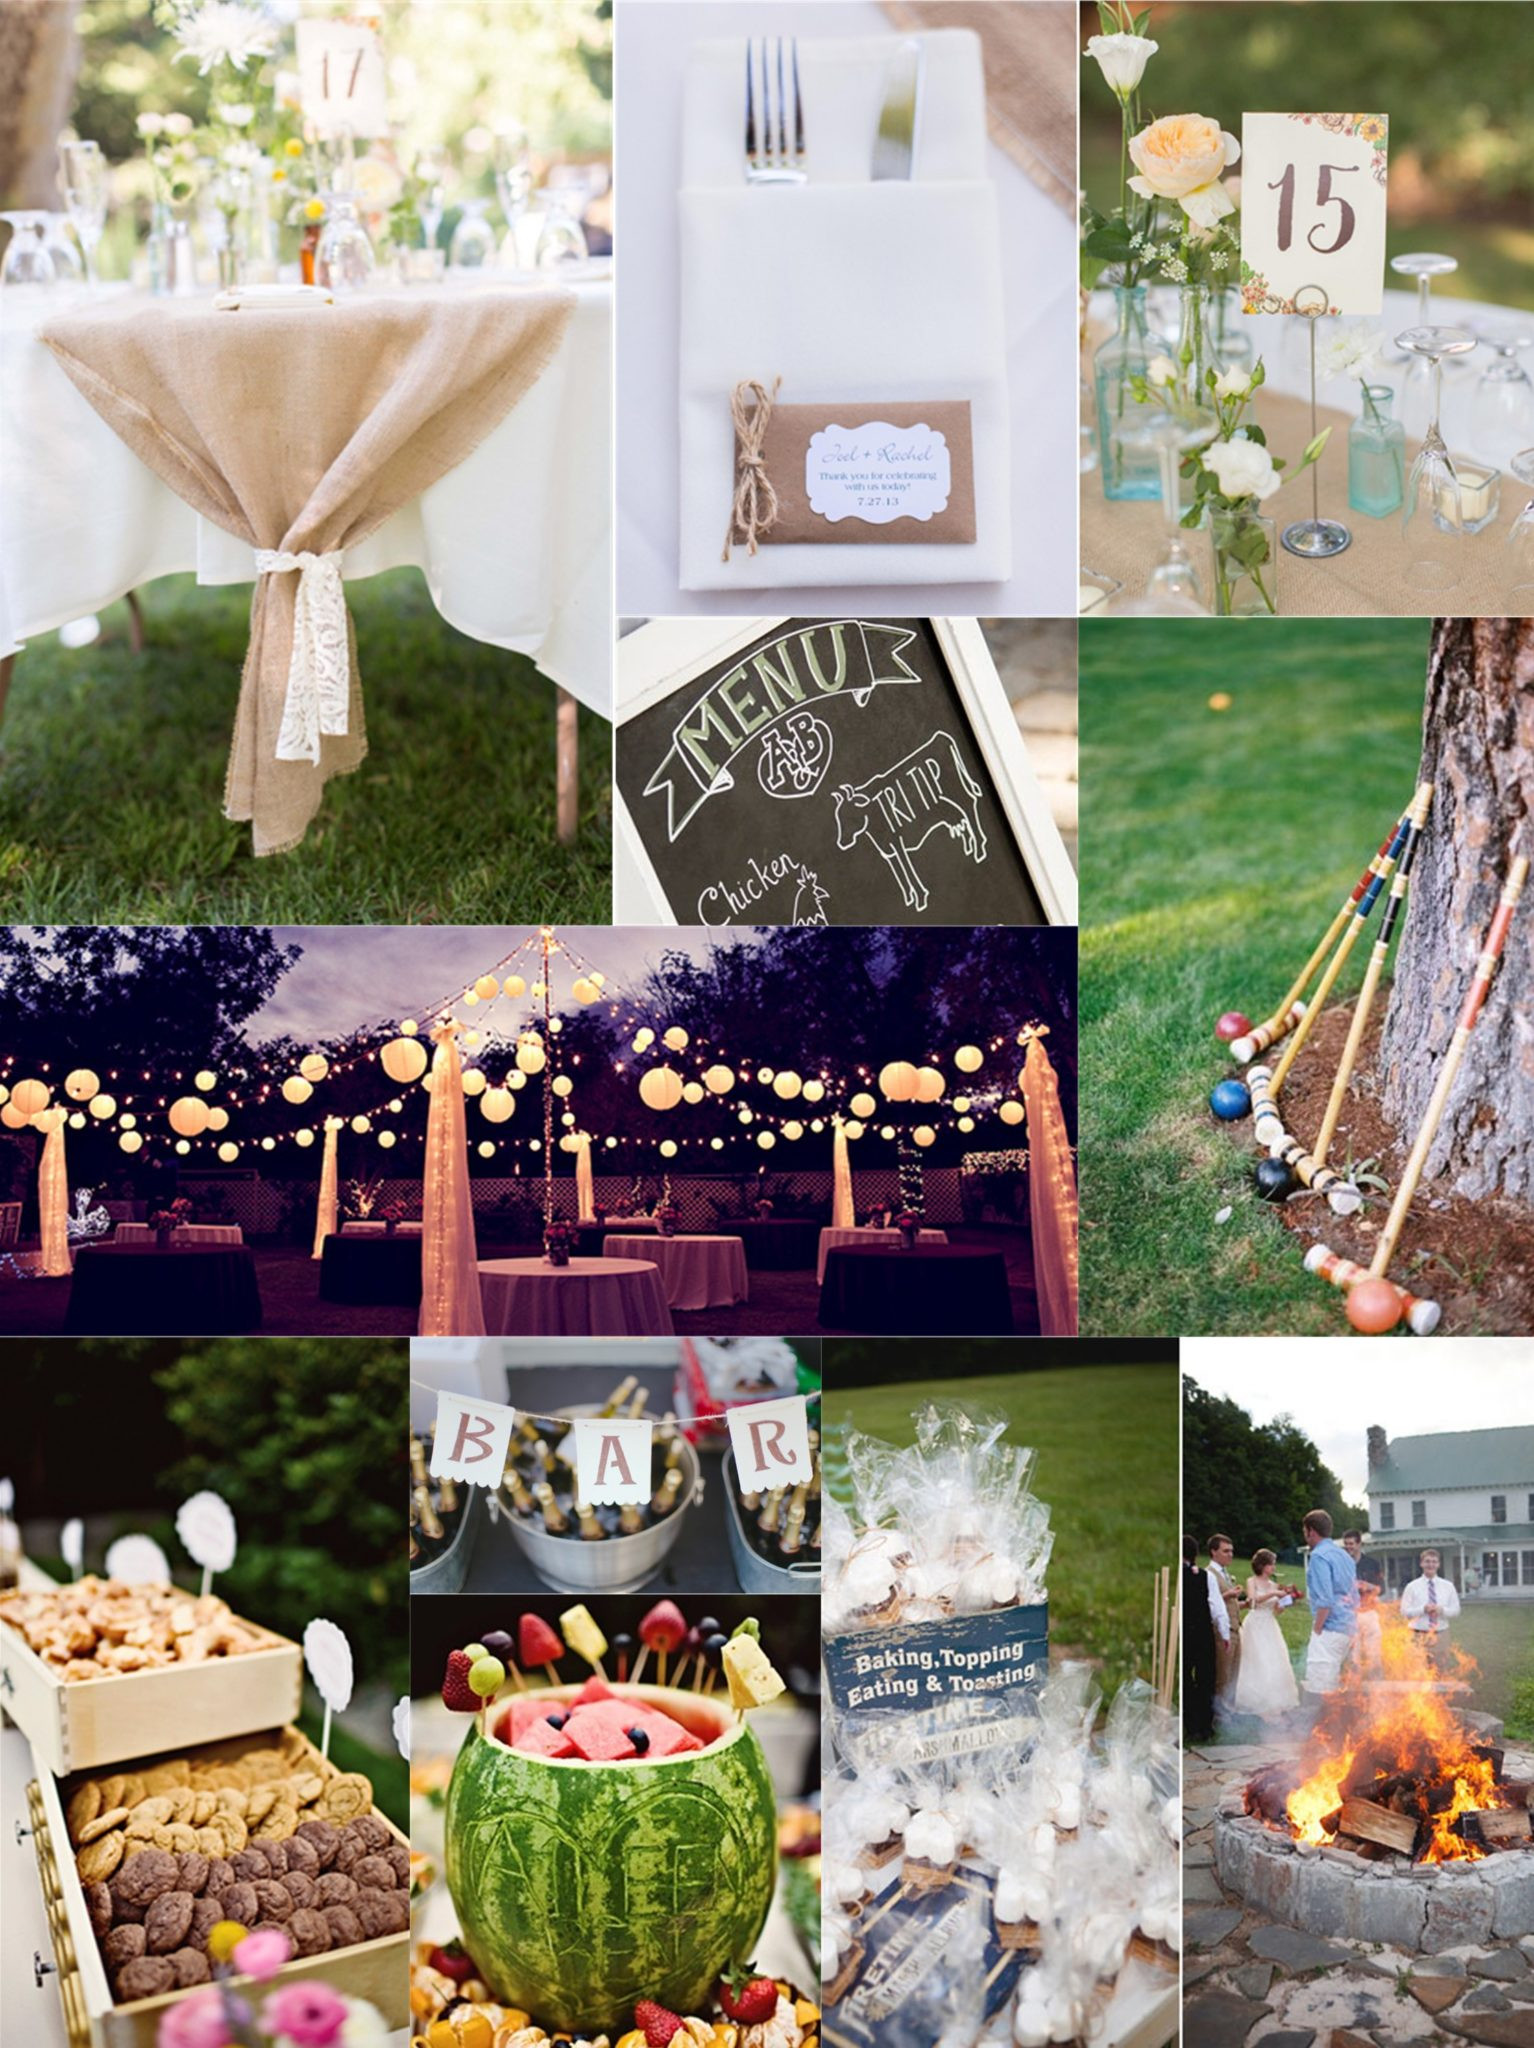 Cheap Backyard Party Ideas
 Essential Guide to a Backyard Wedding on a Bud